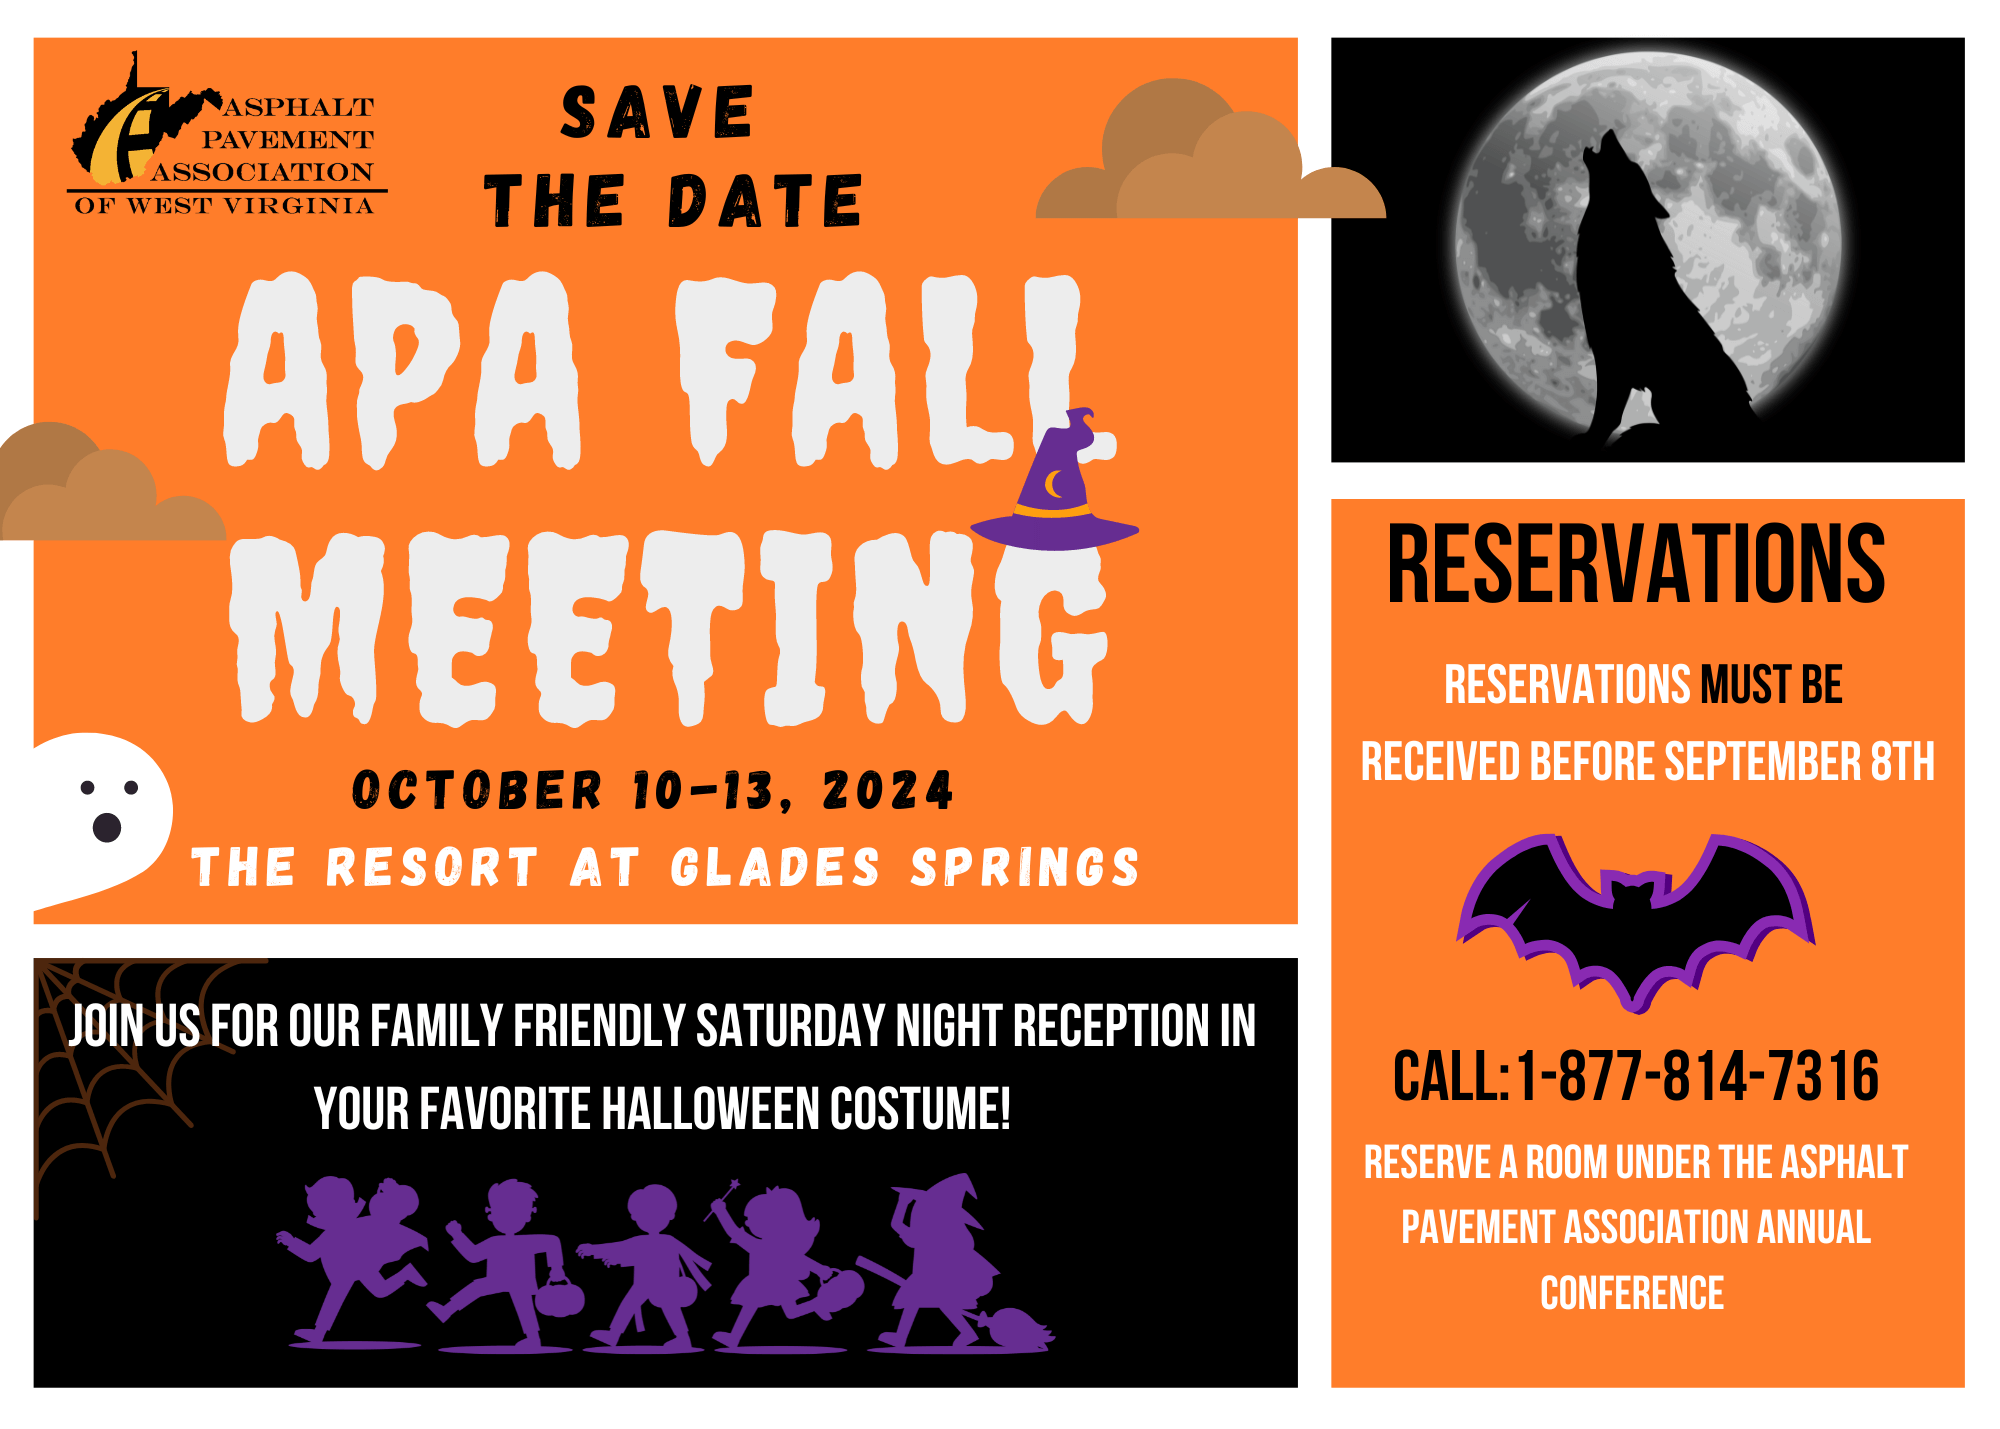 apa fall meeting Save the Date